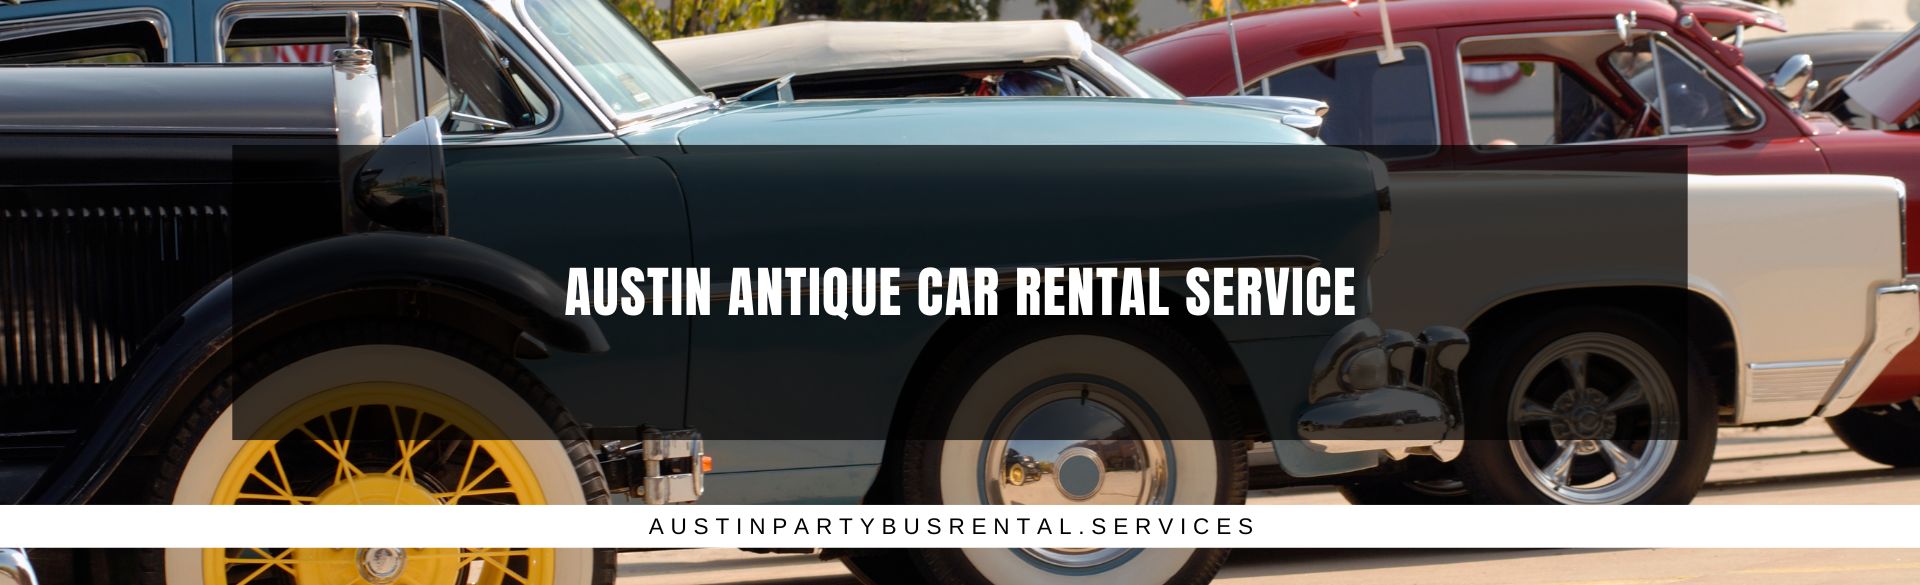 Austin Antique Car Rental Service